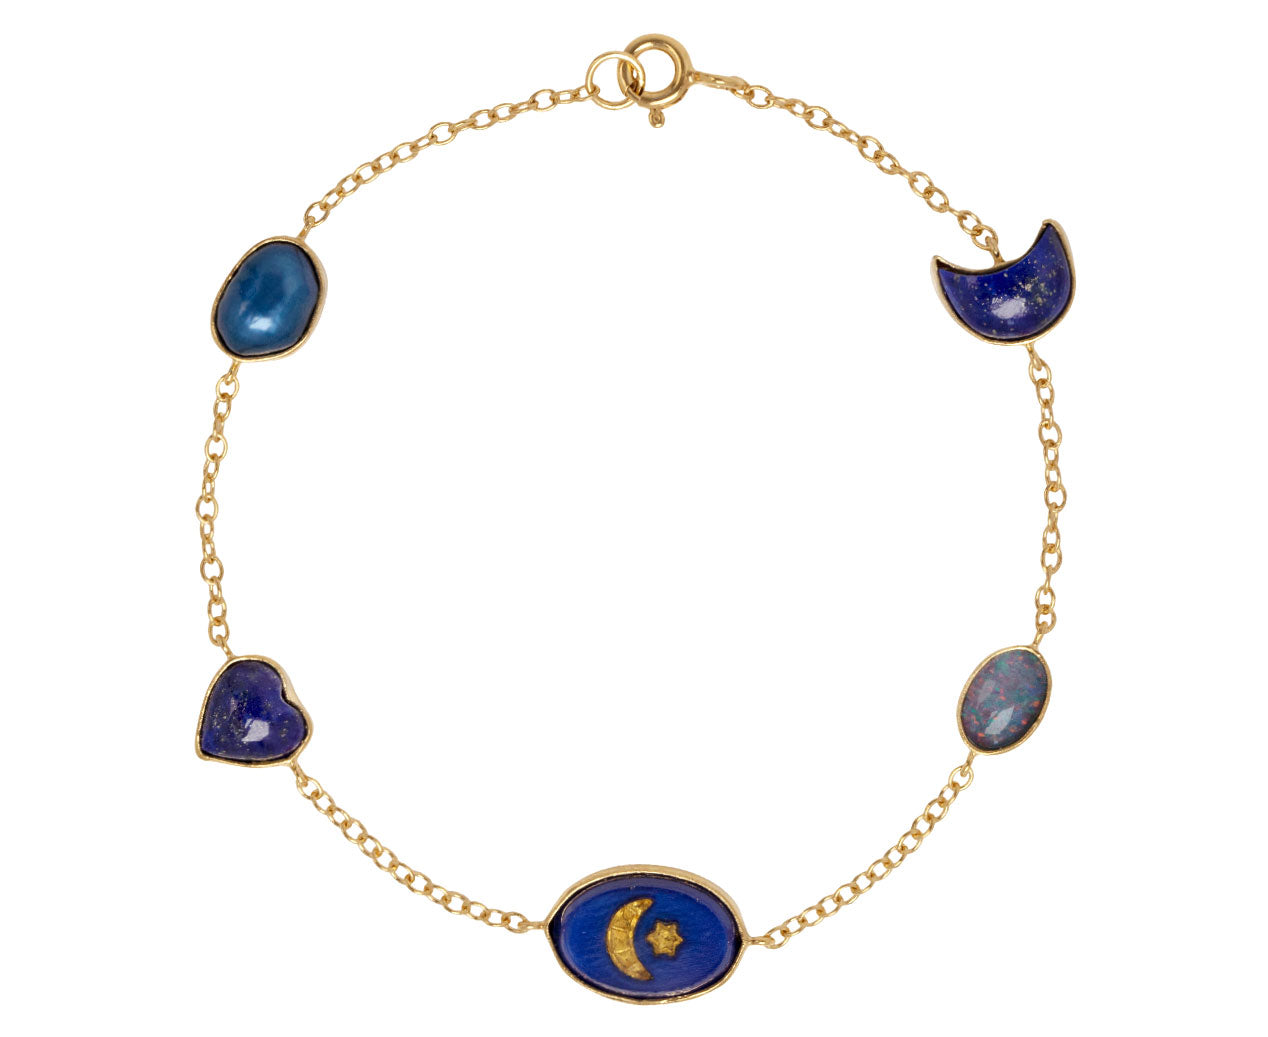 Lapis Lazuli beads and Gold Plated Mini Charm Bracelet - Range of